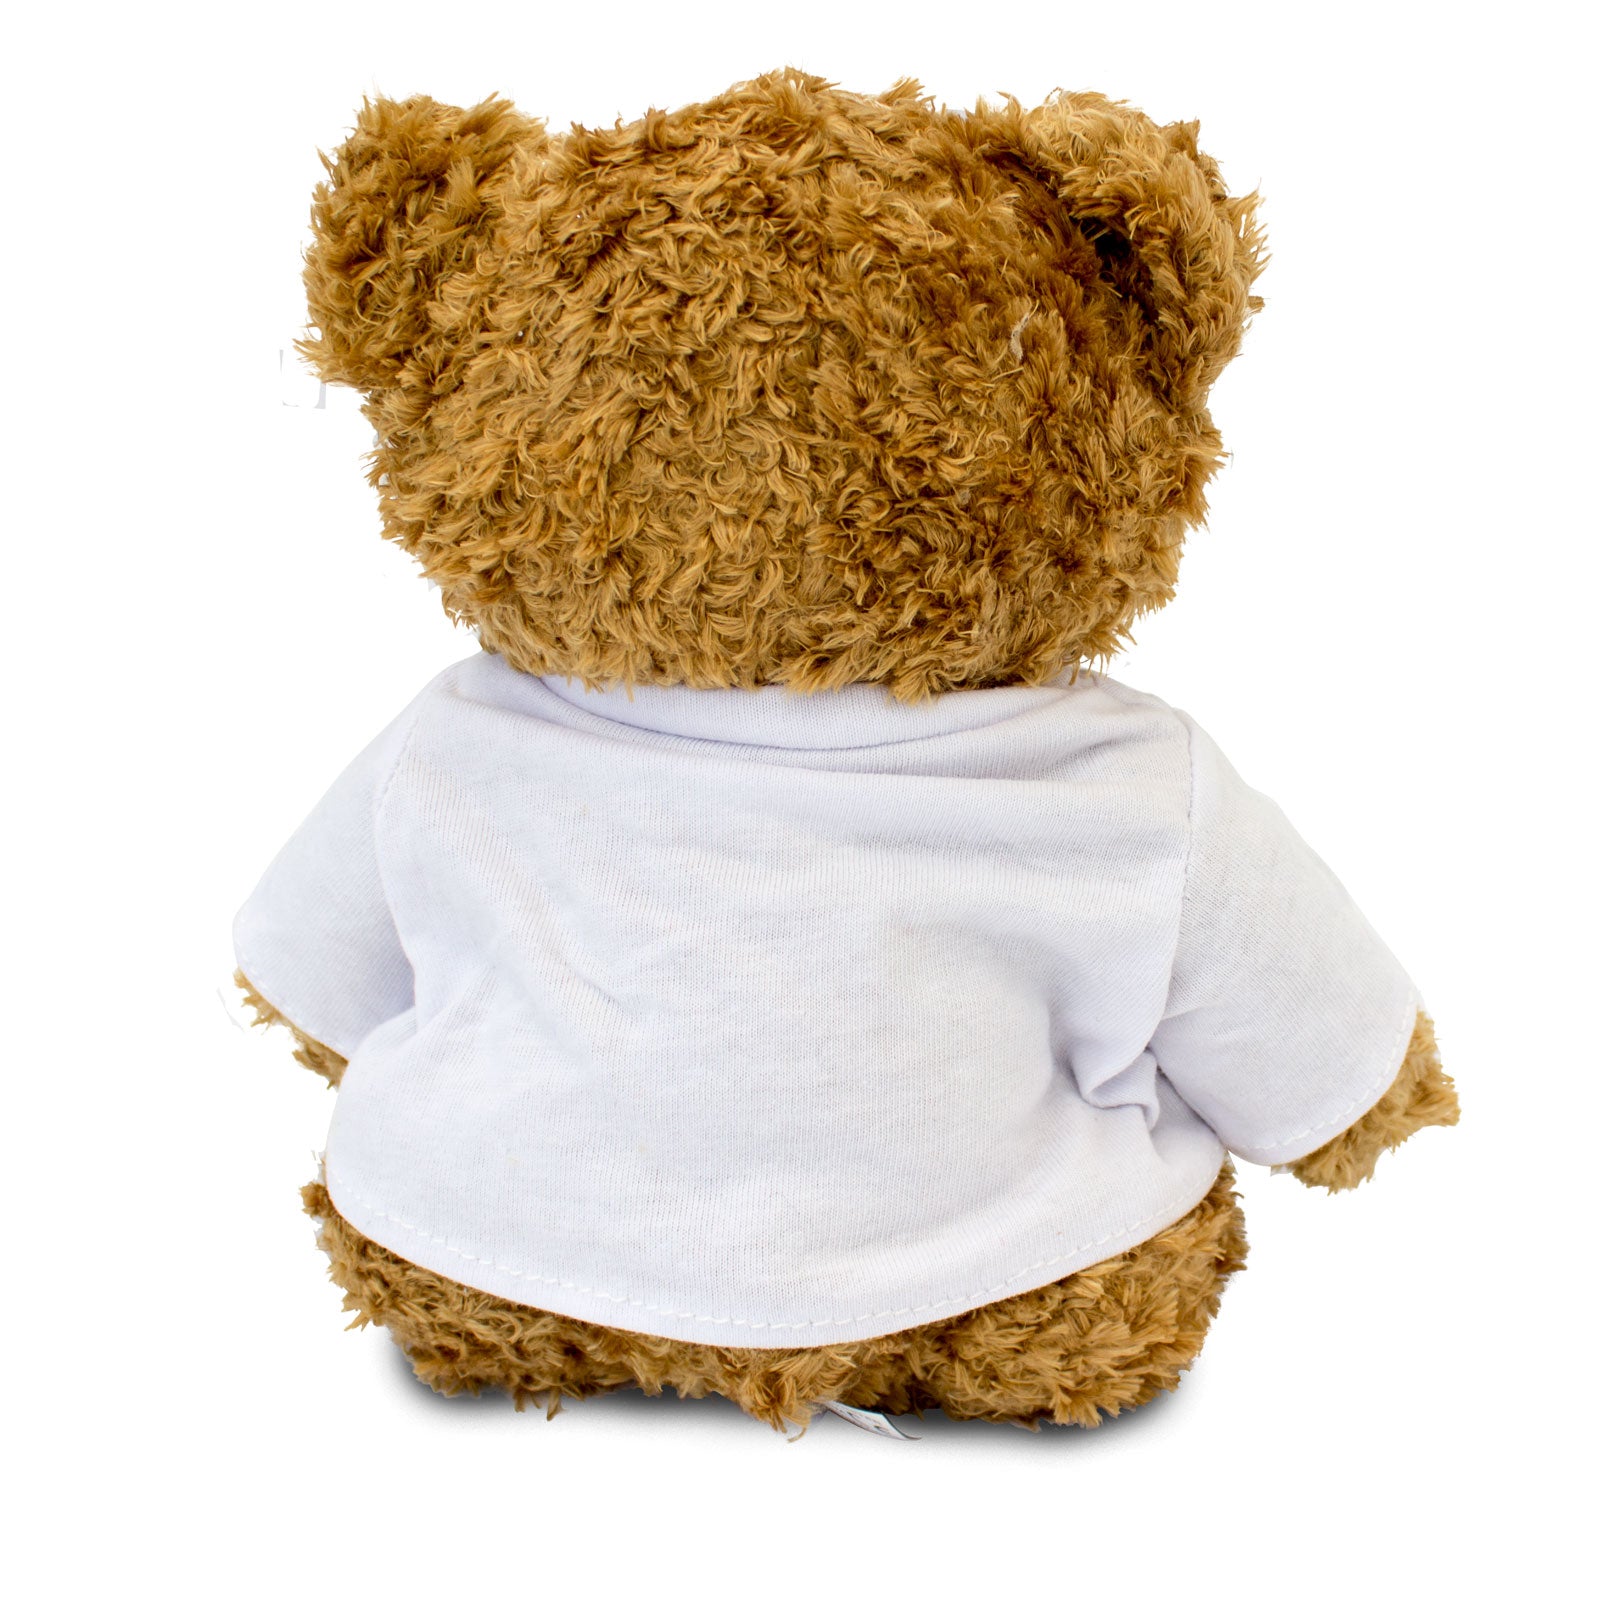 I Love Cricket - Teddy Bear